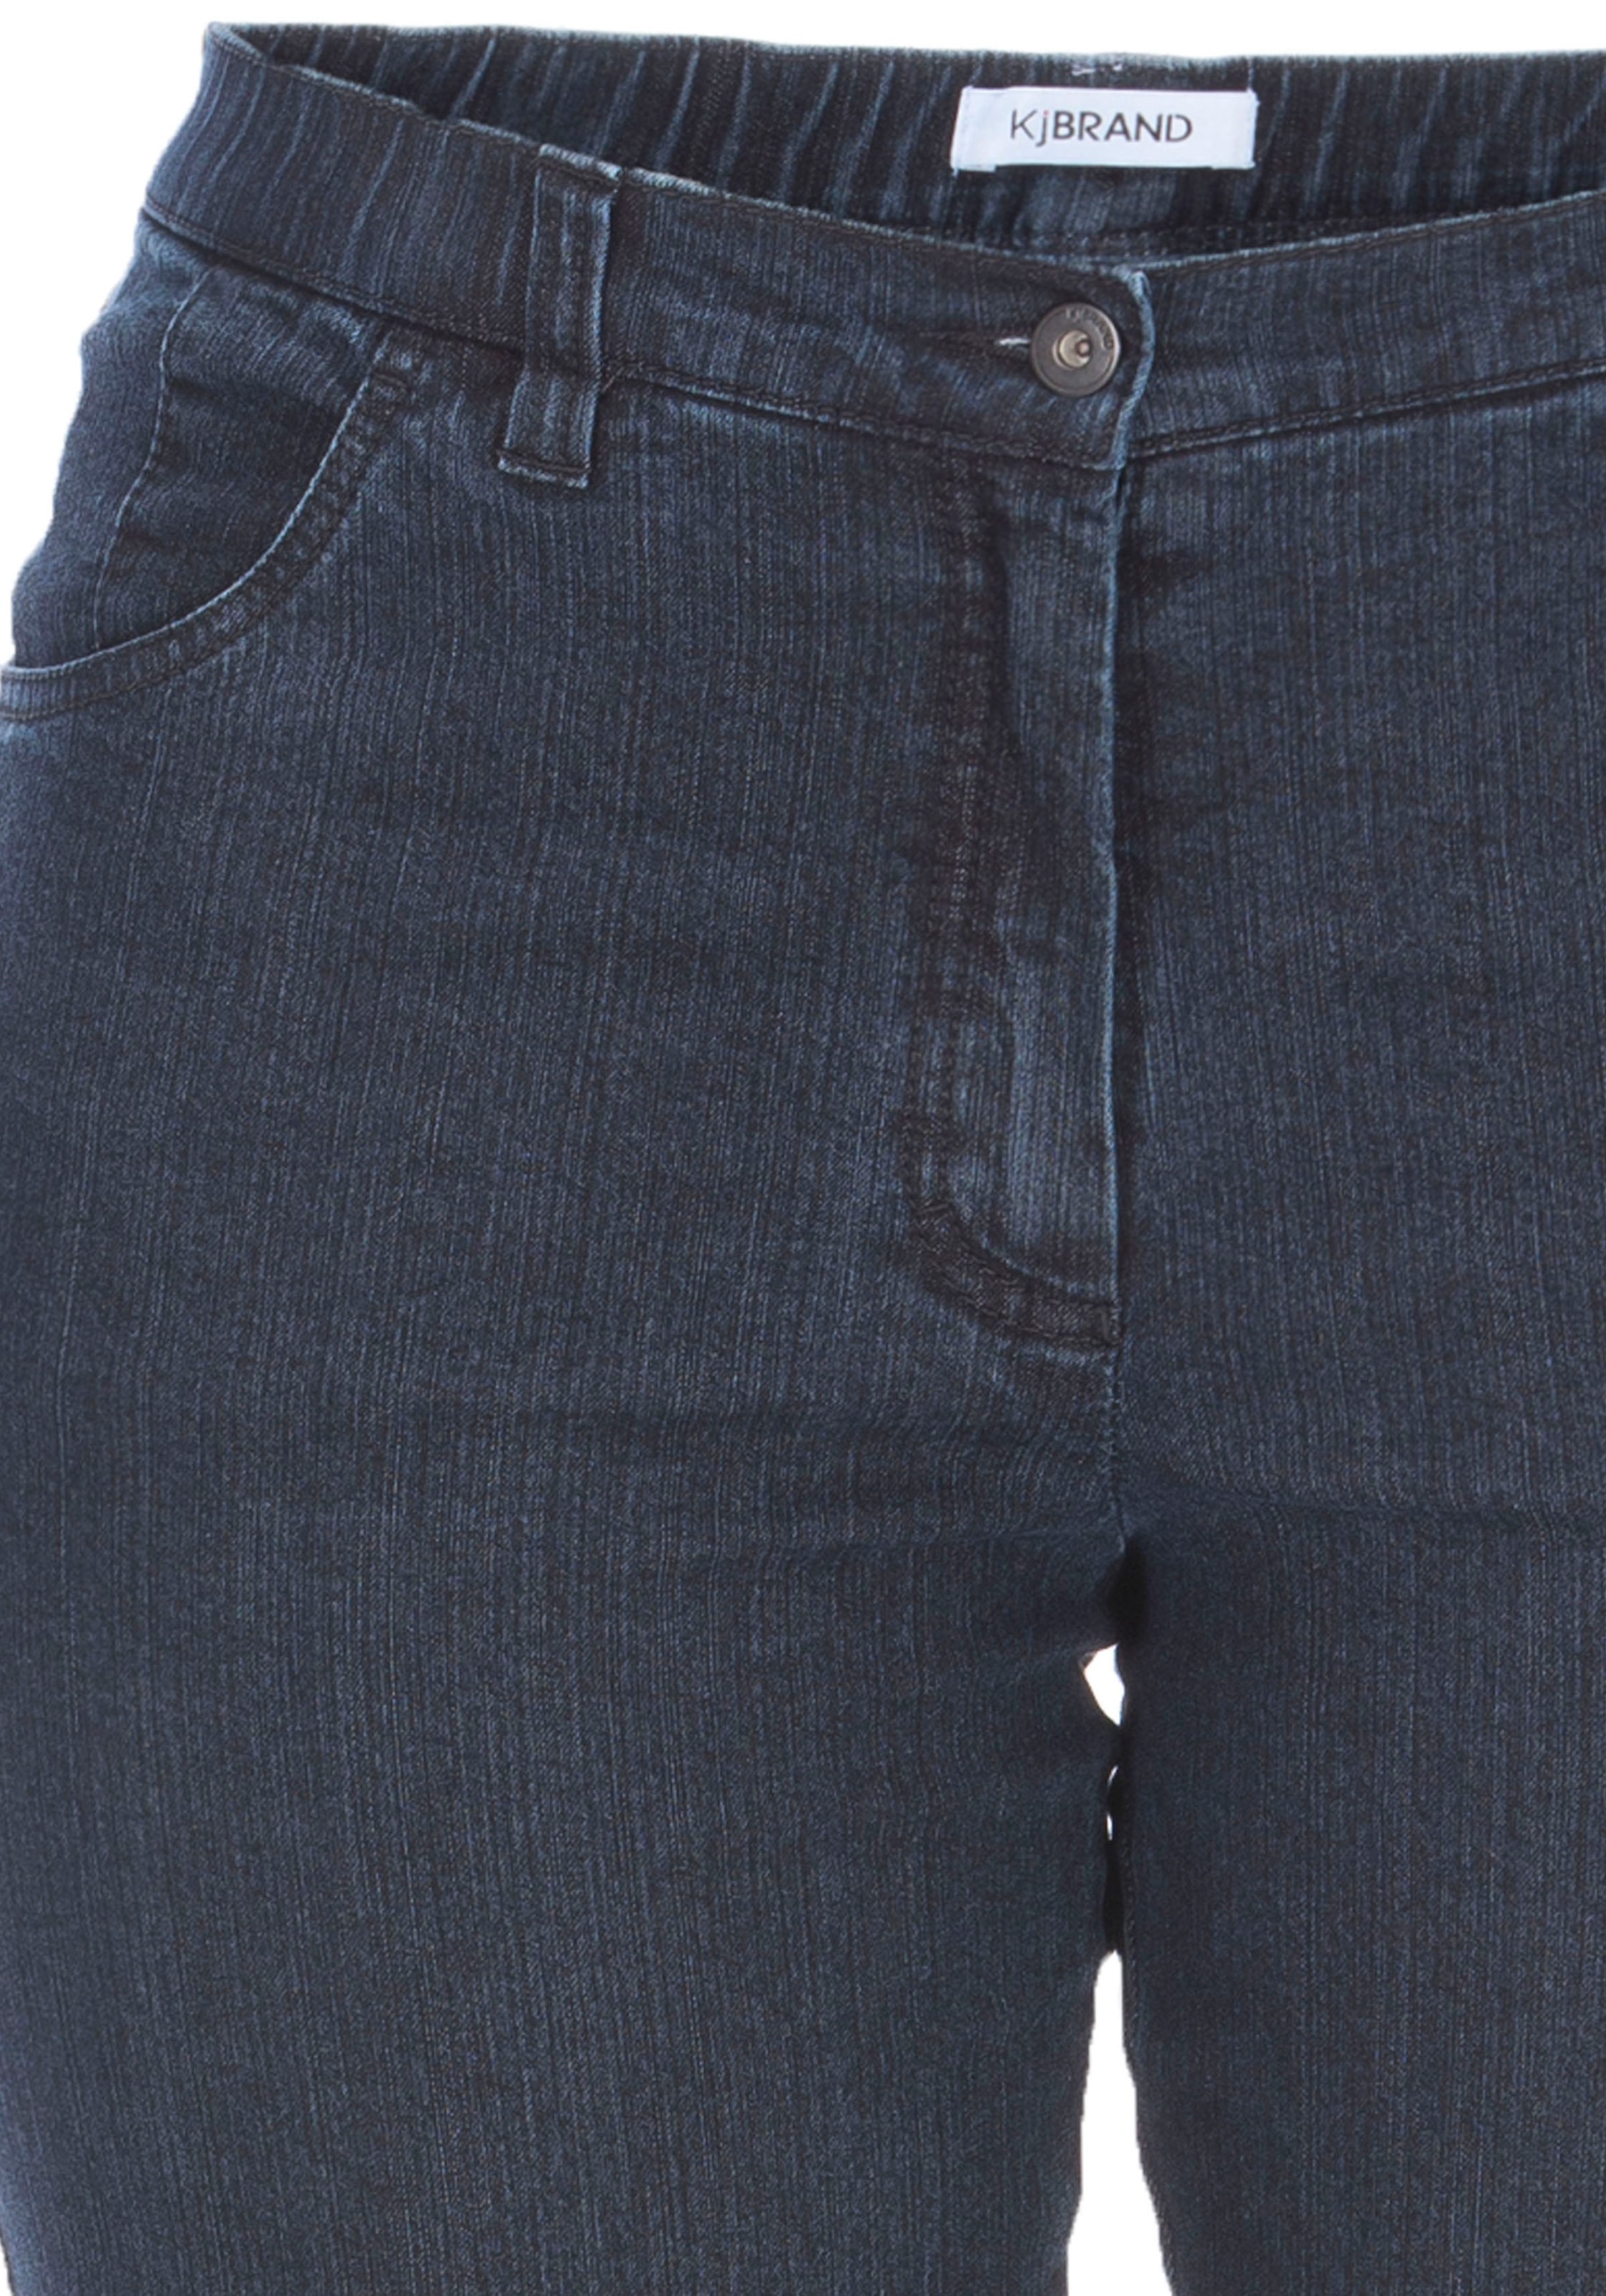 KjBRAND Stretch-Jeans »Betty Shop Online Denim OTTO Stretch« im